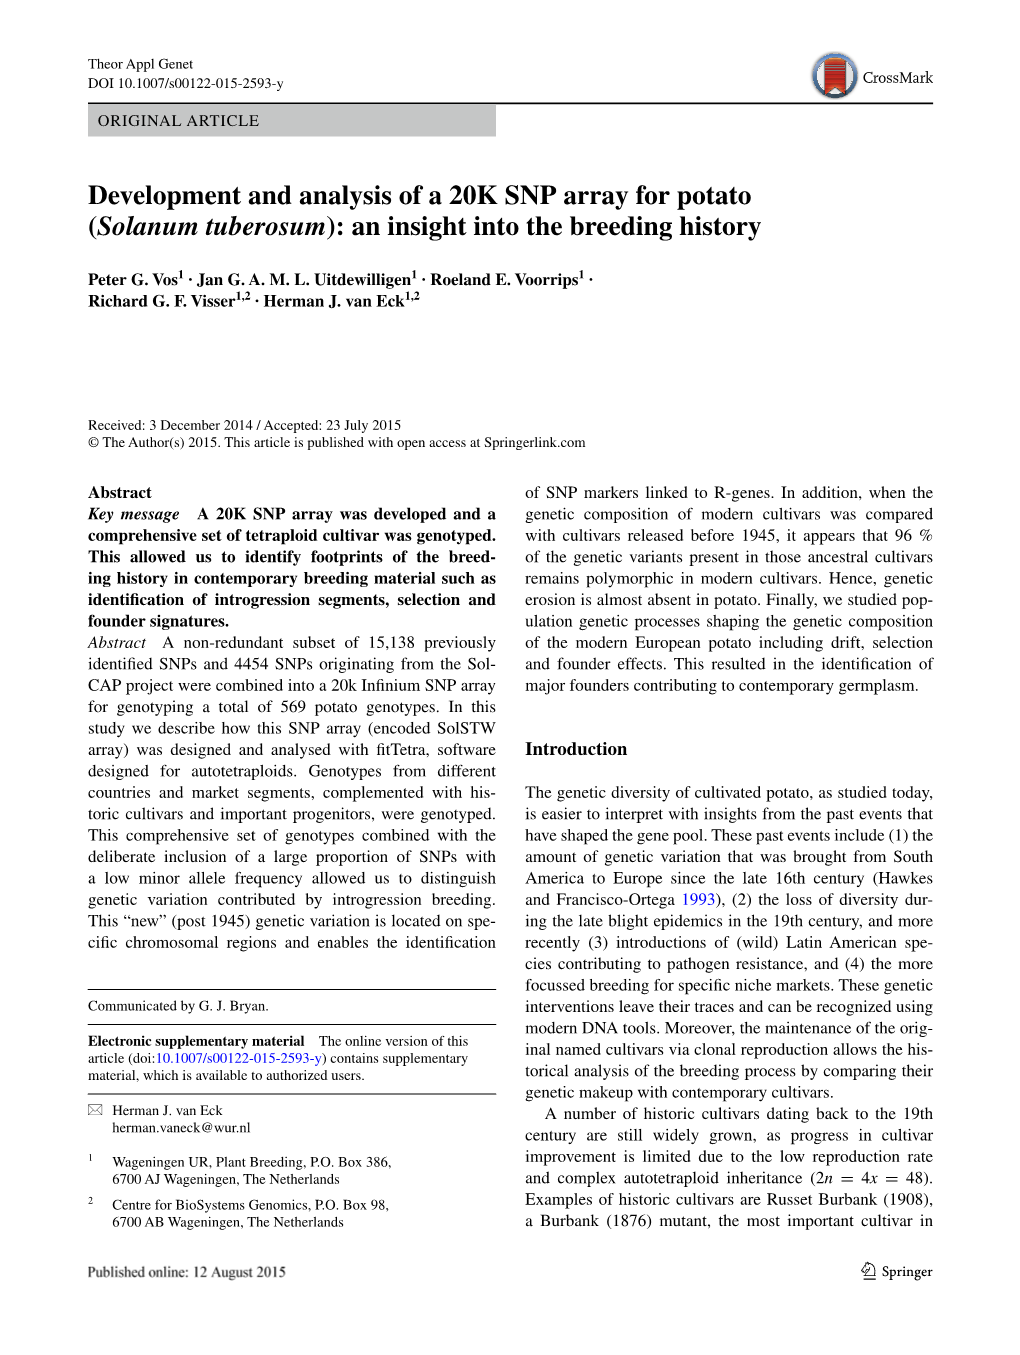 Development and Analysis of a 20K SNP Array for Potato (Solanum Tuberosum): an Insight Into the Breeding History